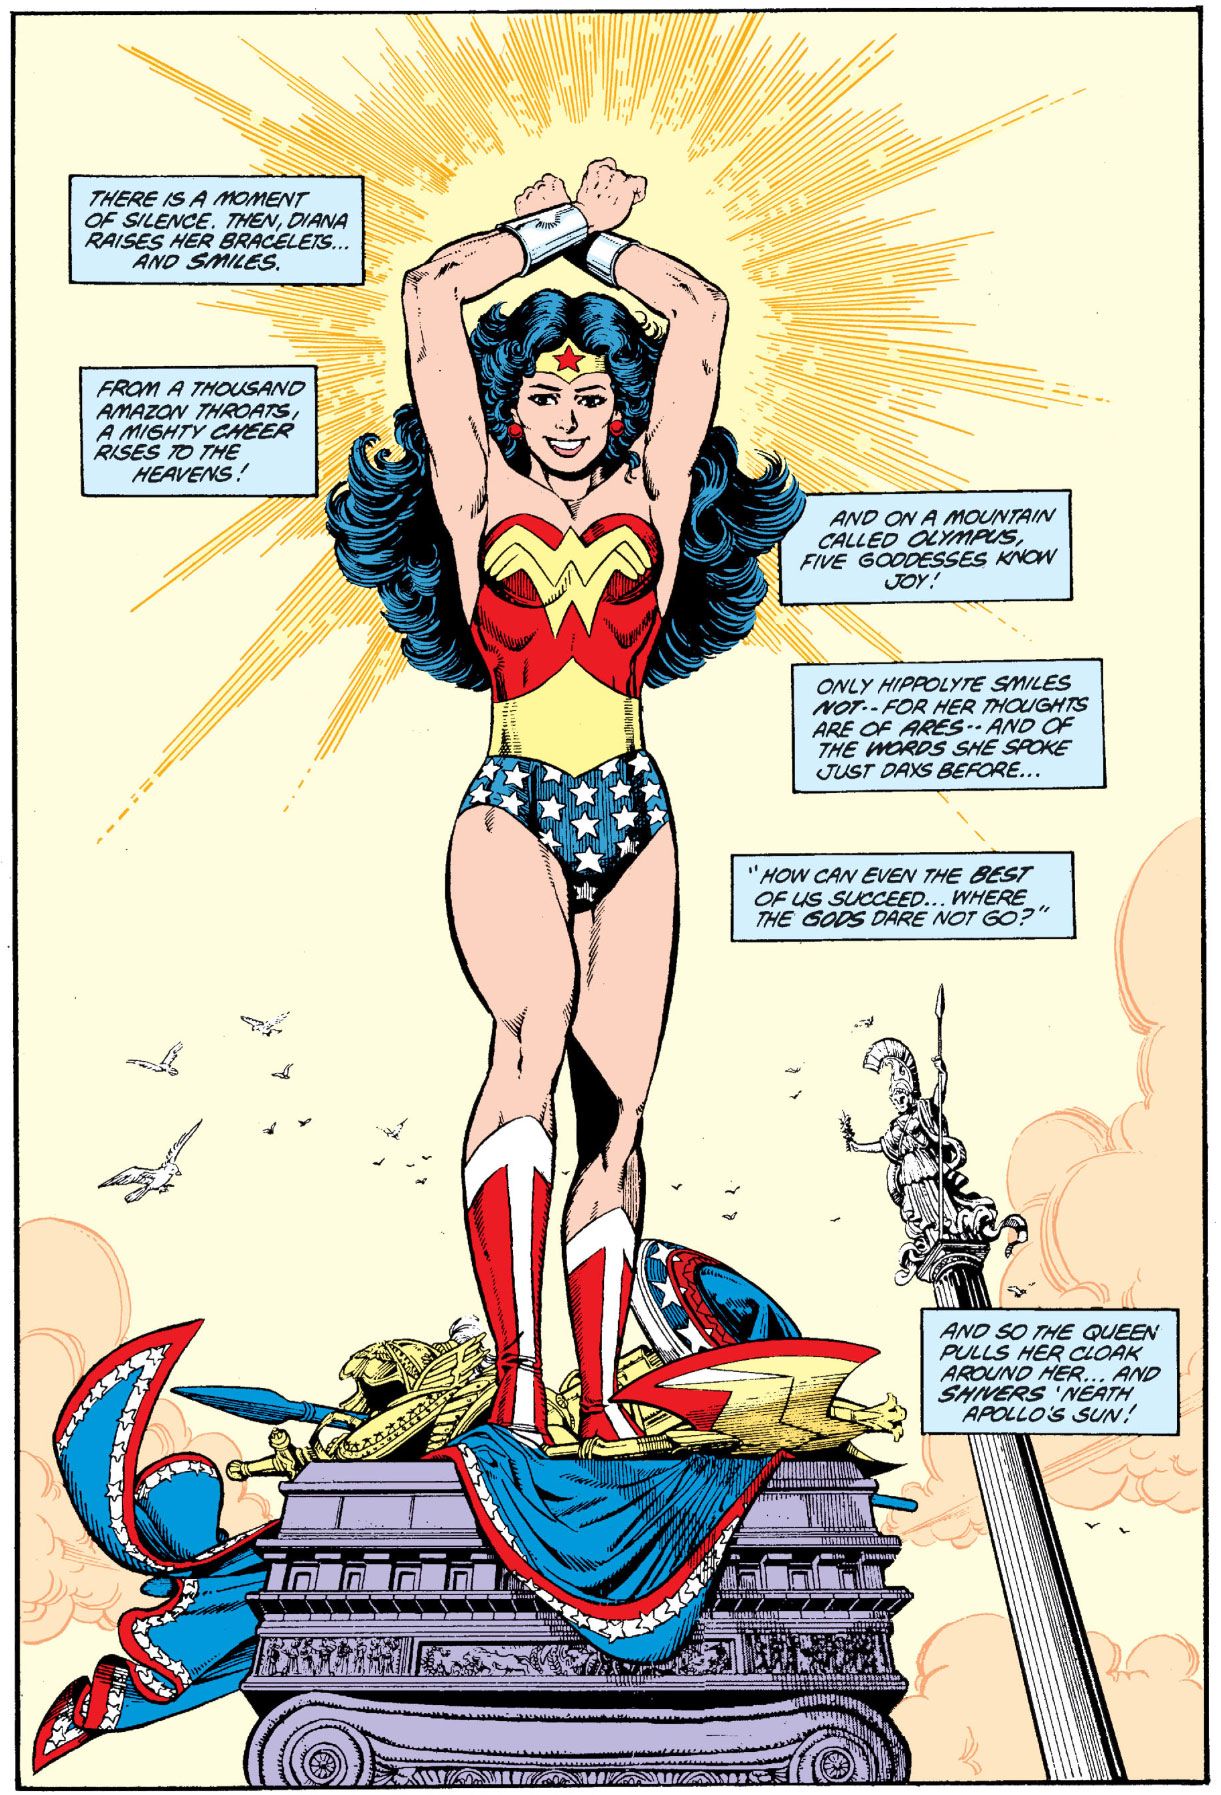 Original Wonder Woman Cartoon Porn - Wonder Woman: Revisiting the Comics Story That Redefined Her